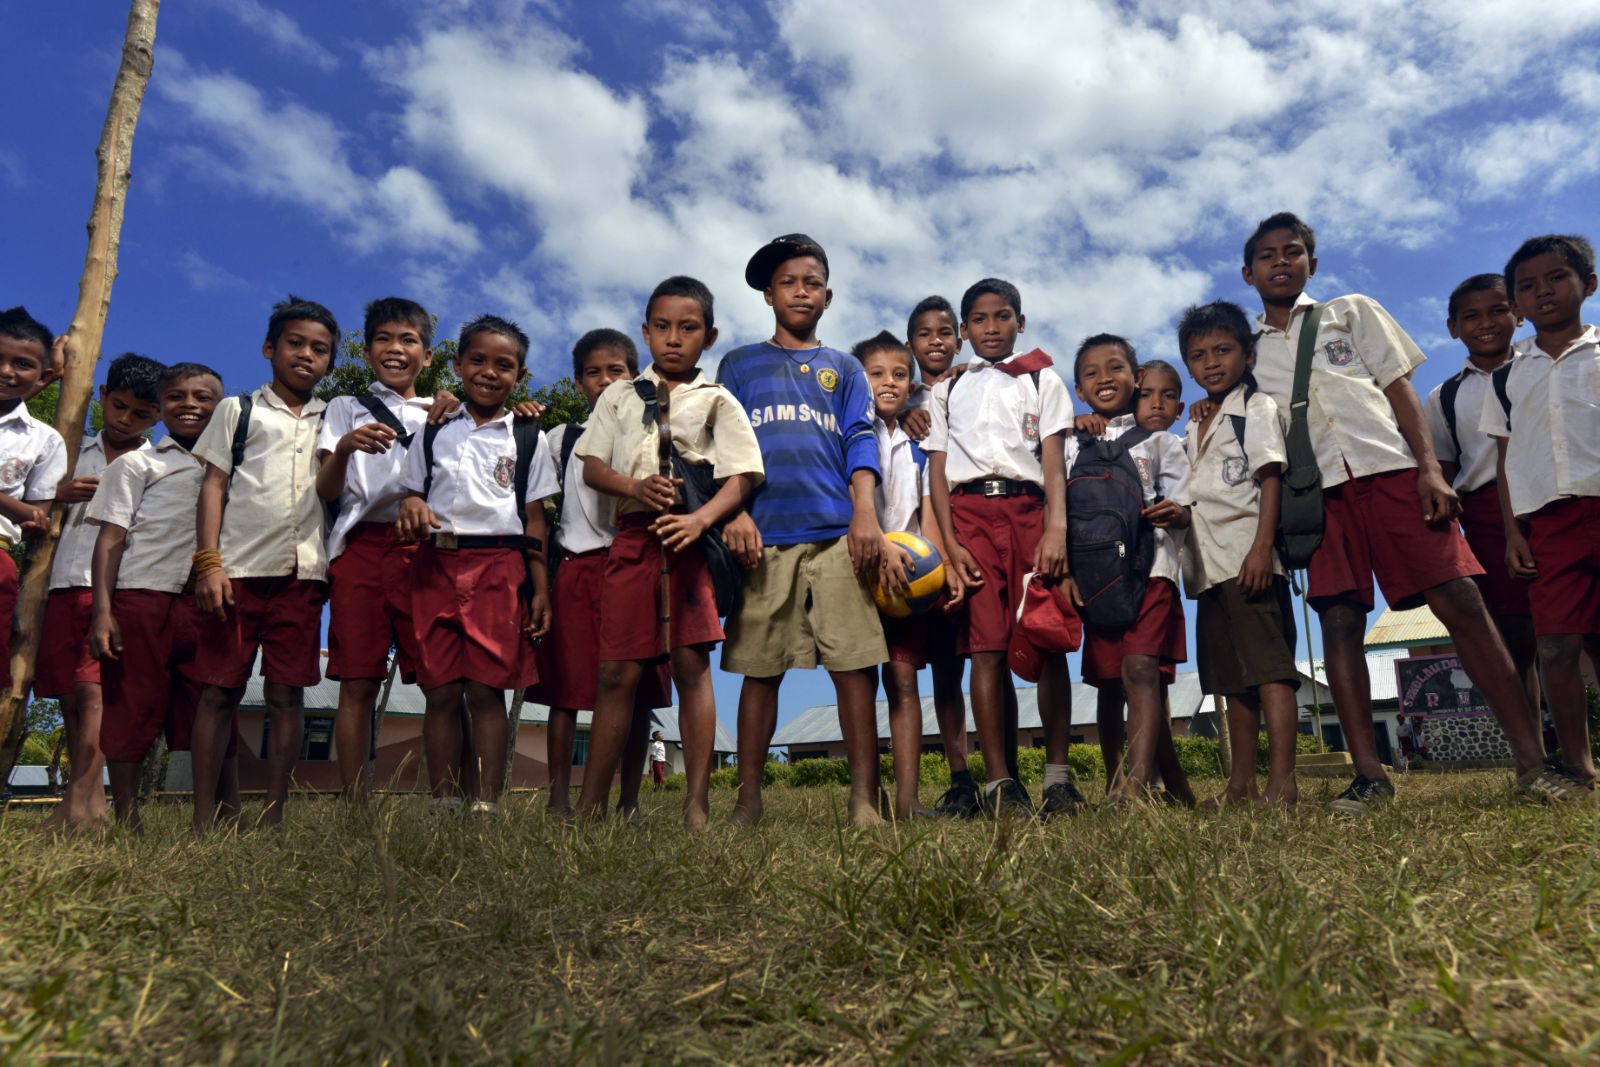 Children of the Sumba Foundation in Indonesia